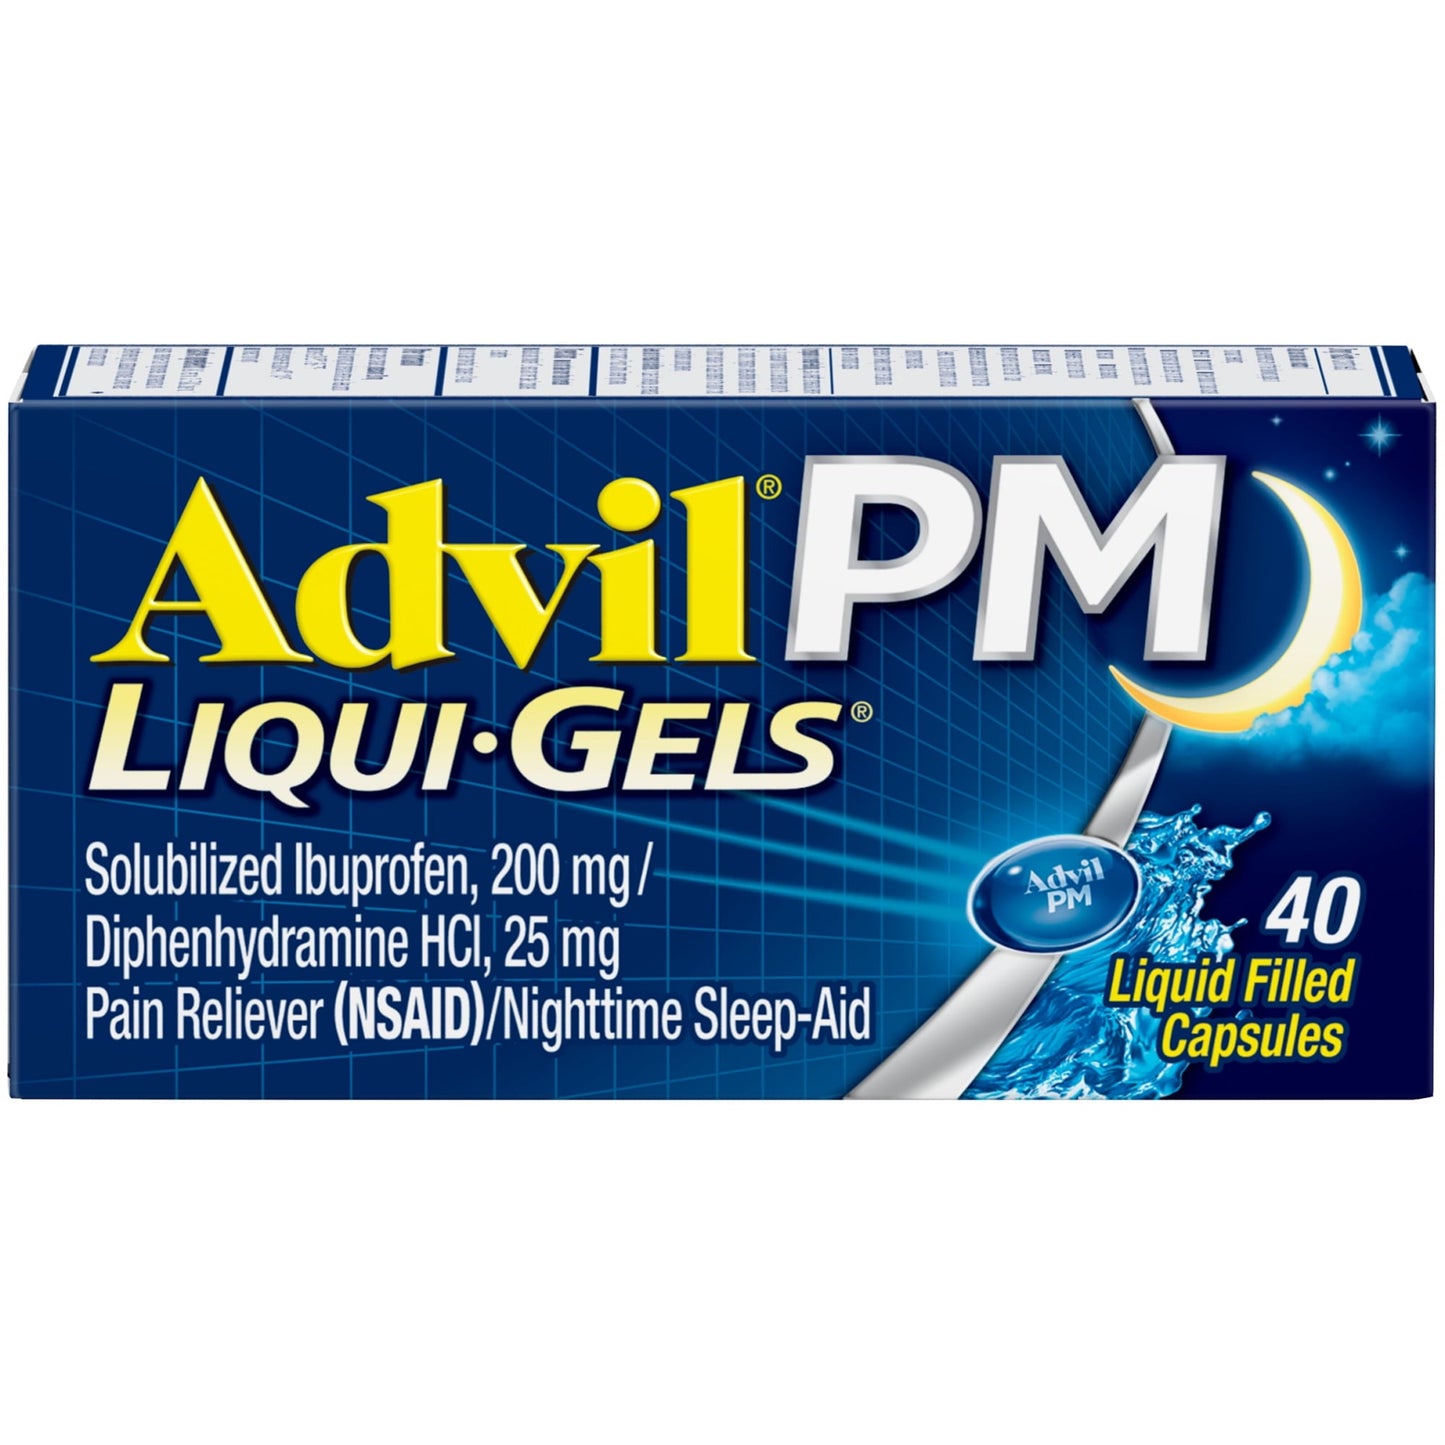 Advil PM Ibuprofen Liqui-Gels Sleep Aid Pain and Headache Reliever, 200 Mg Liquid Filled Capsules, 40 Count